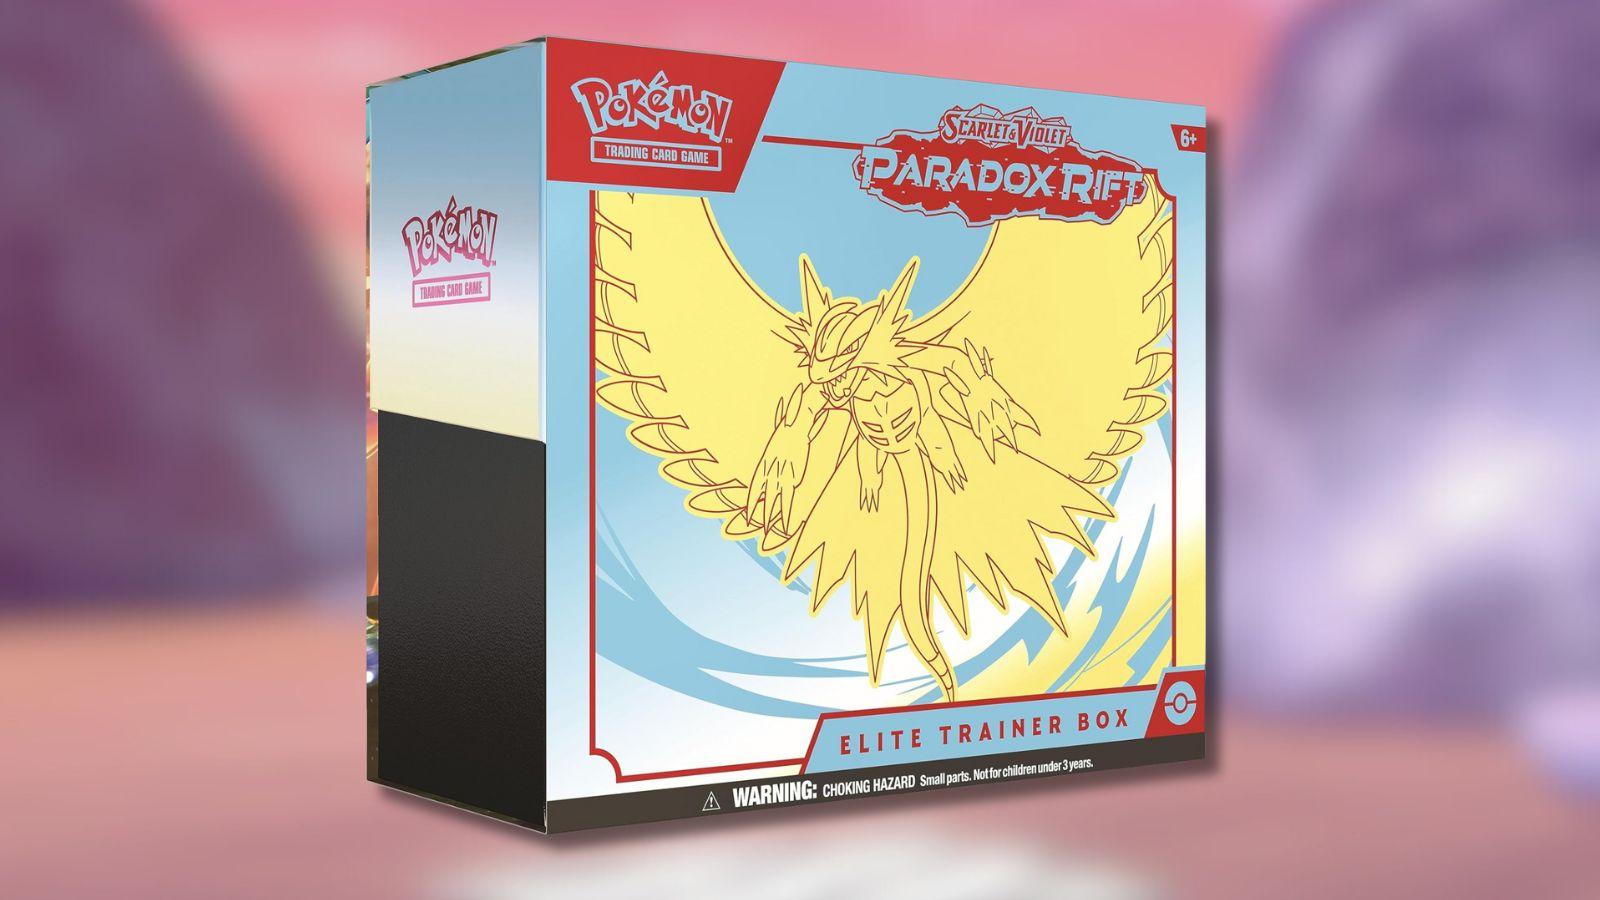 Pokemon Paradox Rift ETB with game background.